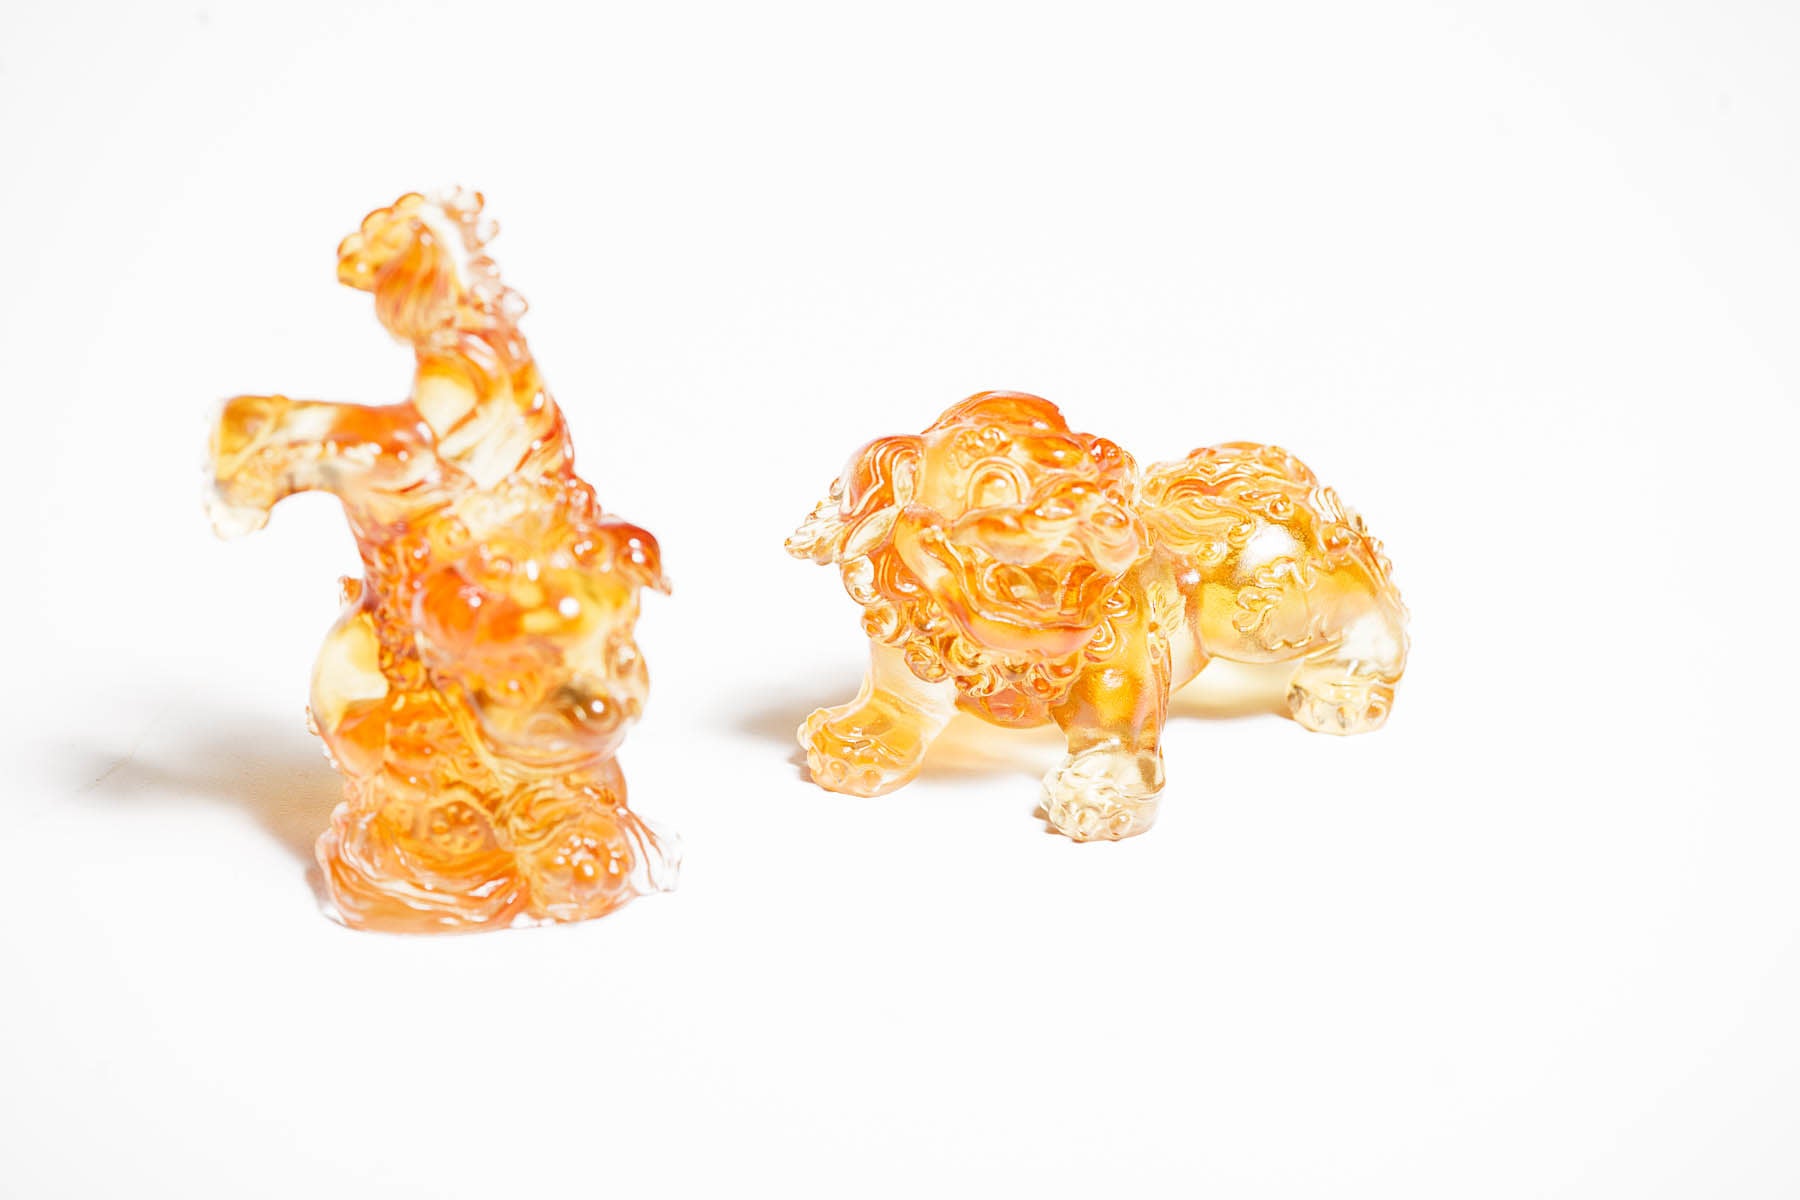 LIULI Crystal Art Crystal Foo Dogs "Happy Dogs Bring Everlasting Wealth" Crystal Sculpture